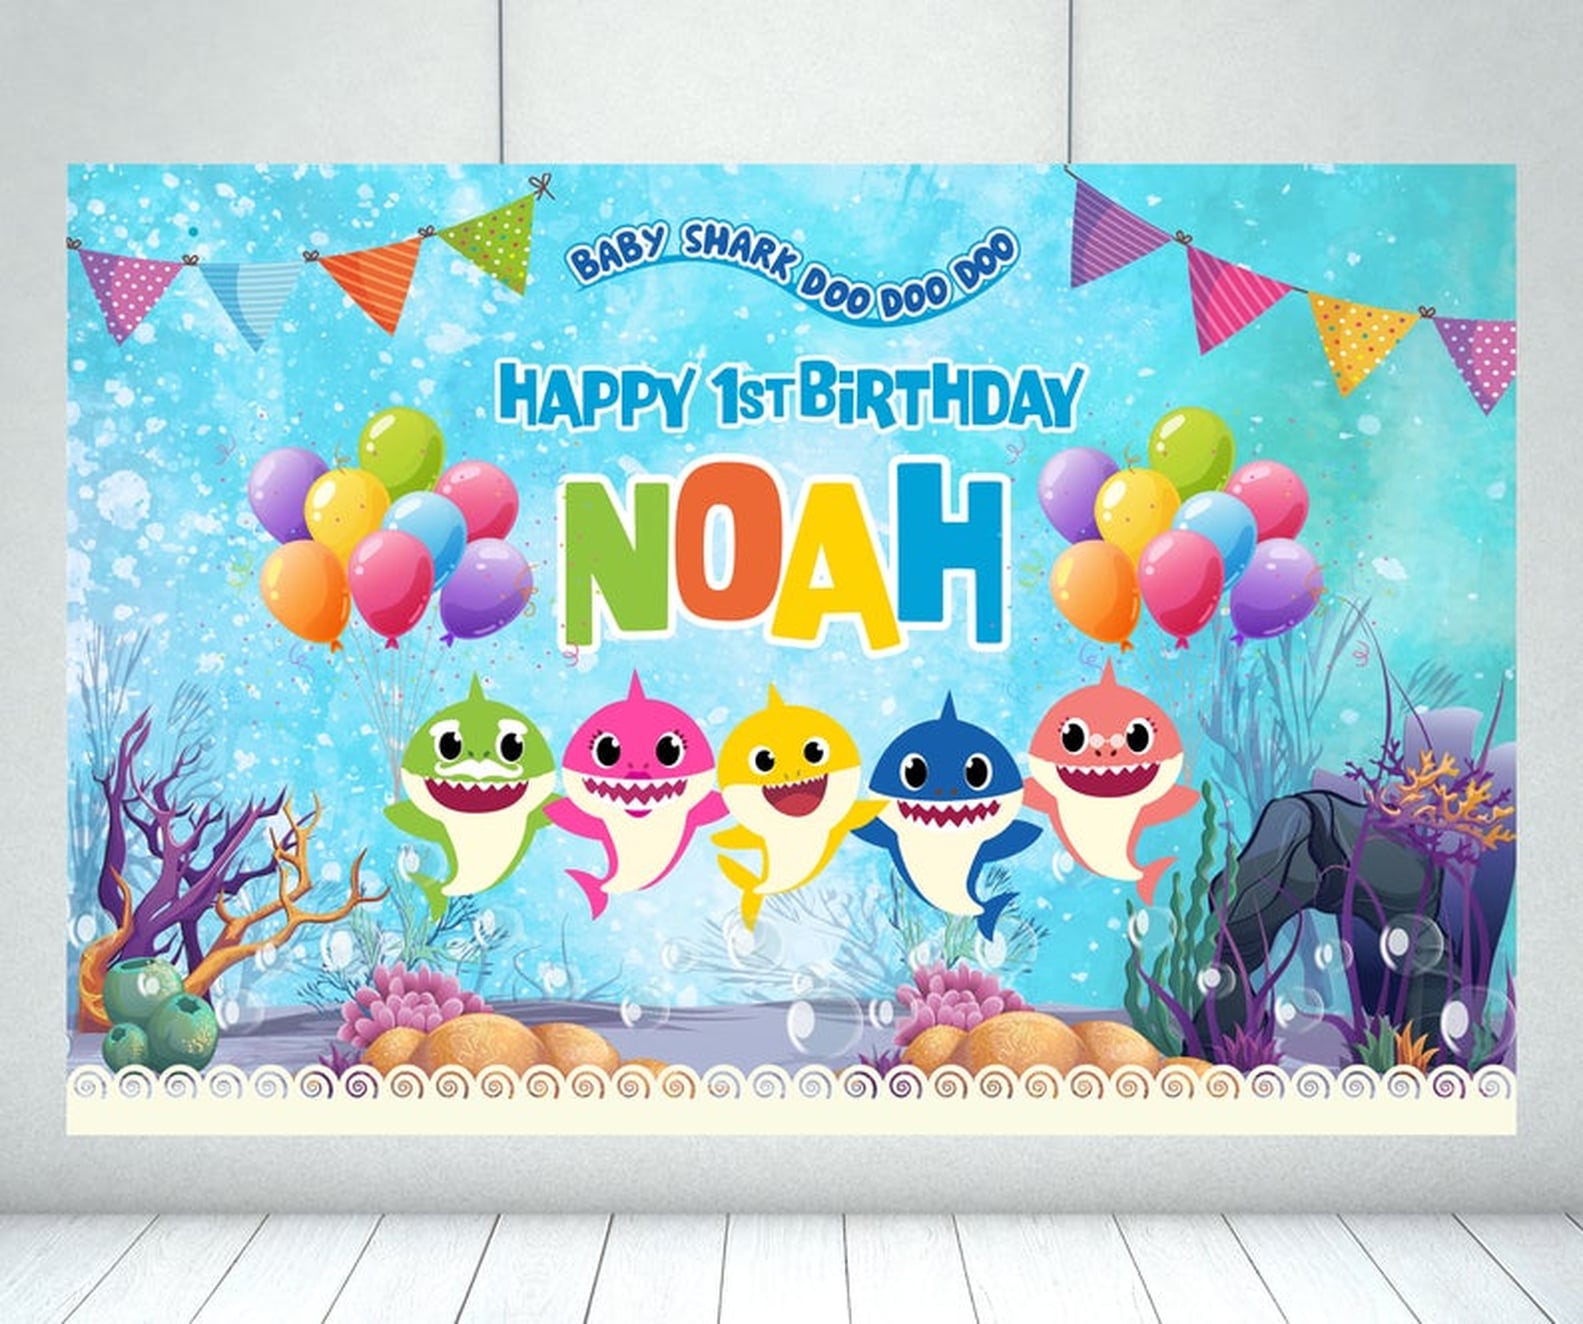 Baby Shark Party Supplies For Kid Birthdays | POPSUGAR Family